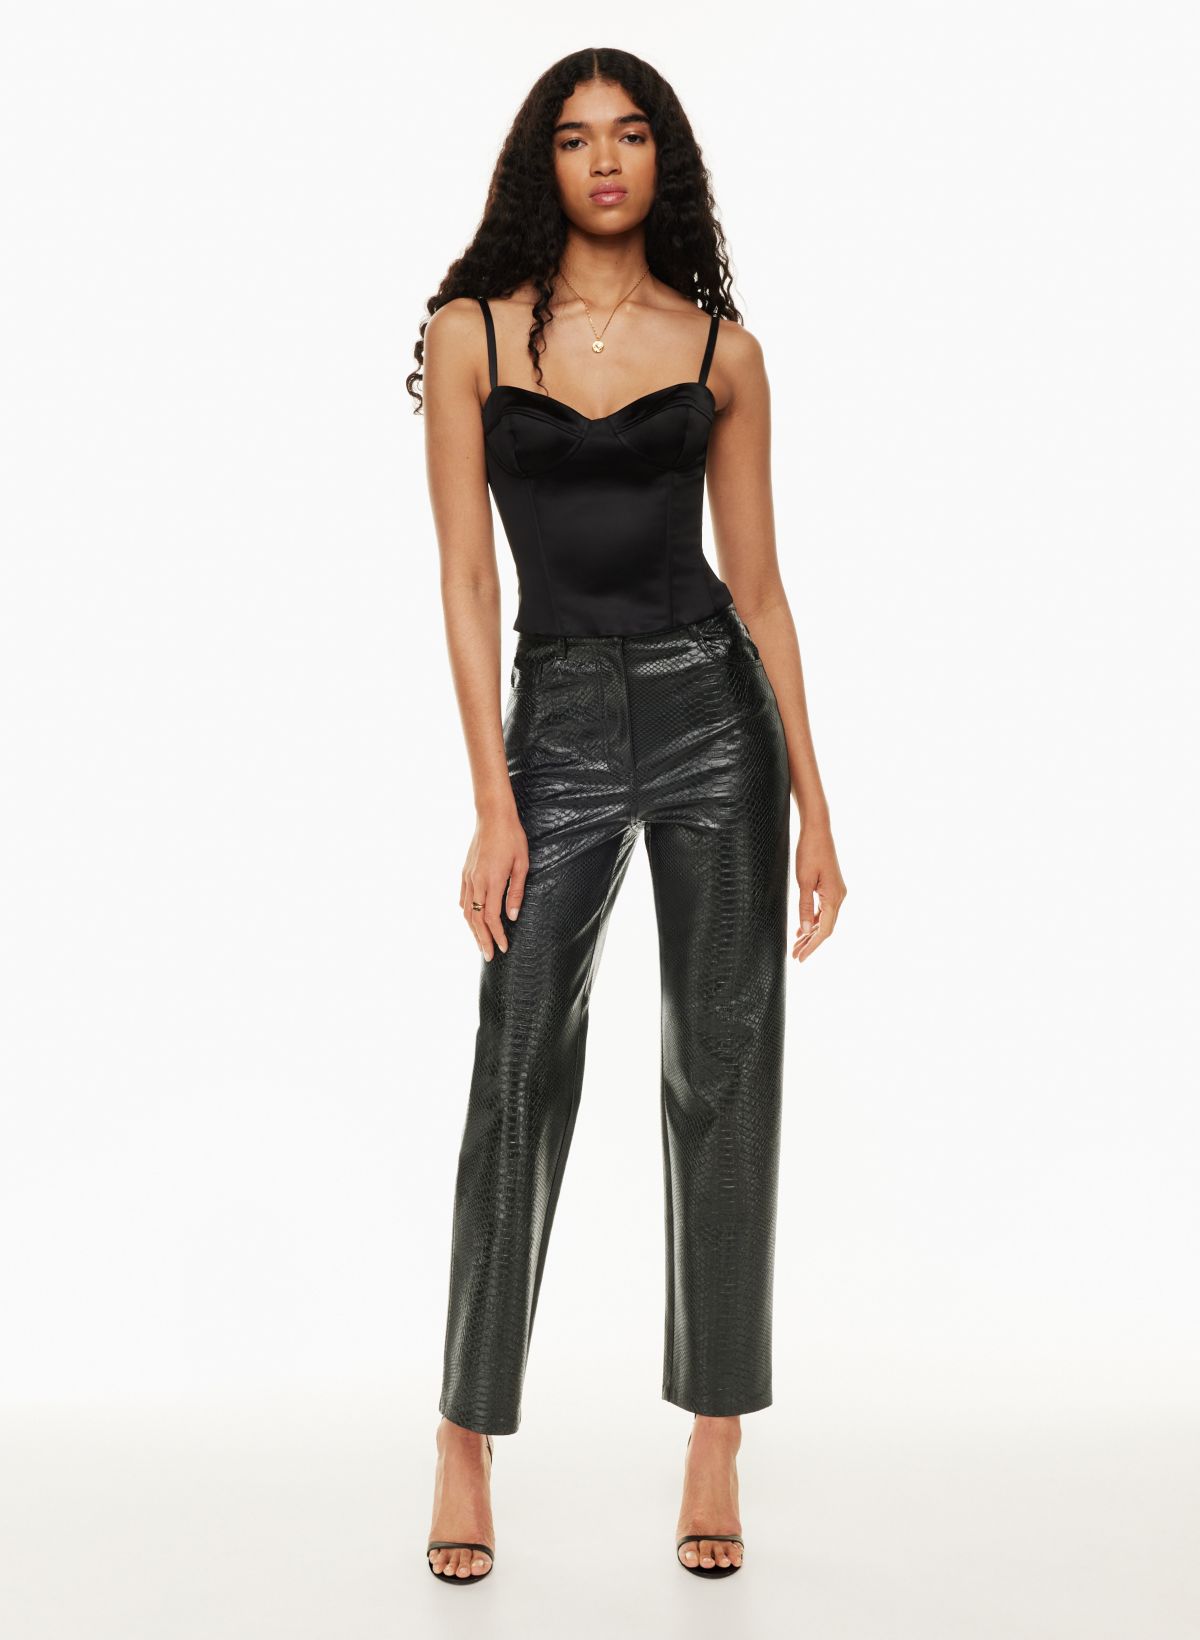 MELINA PANT  Melina pant, Fashion, Leather pants outfit